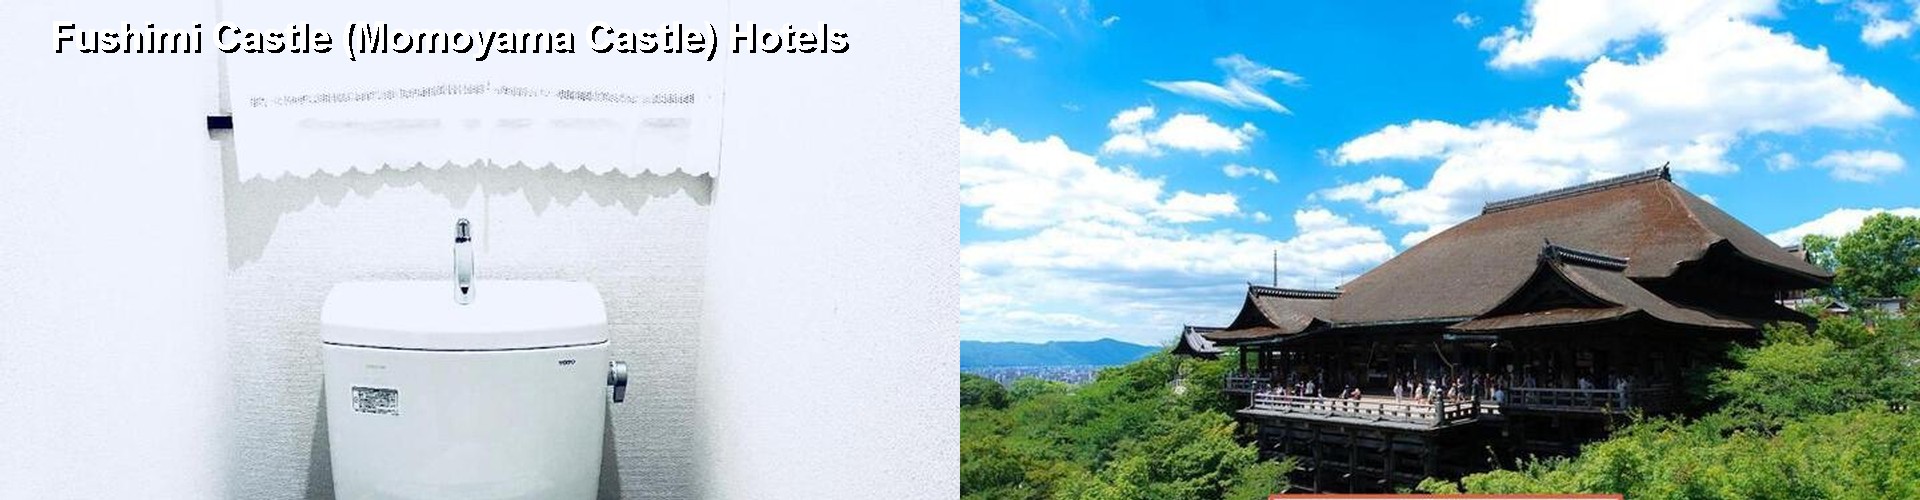 5 Best Hotels near Fushimi Castle (Momoyama Castle)